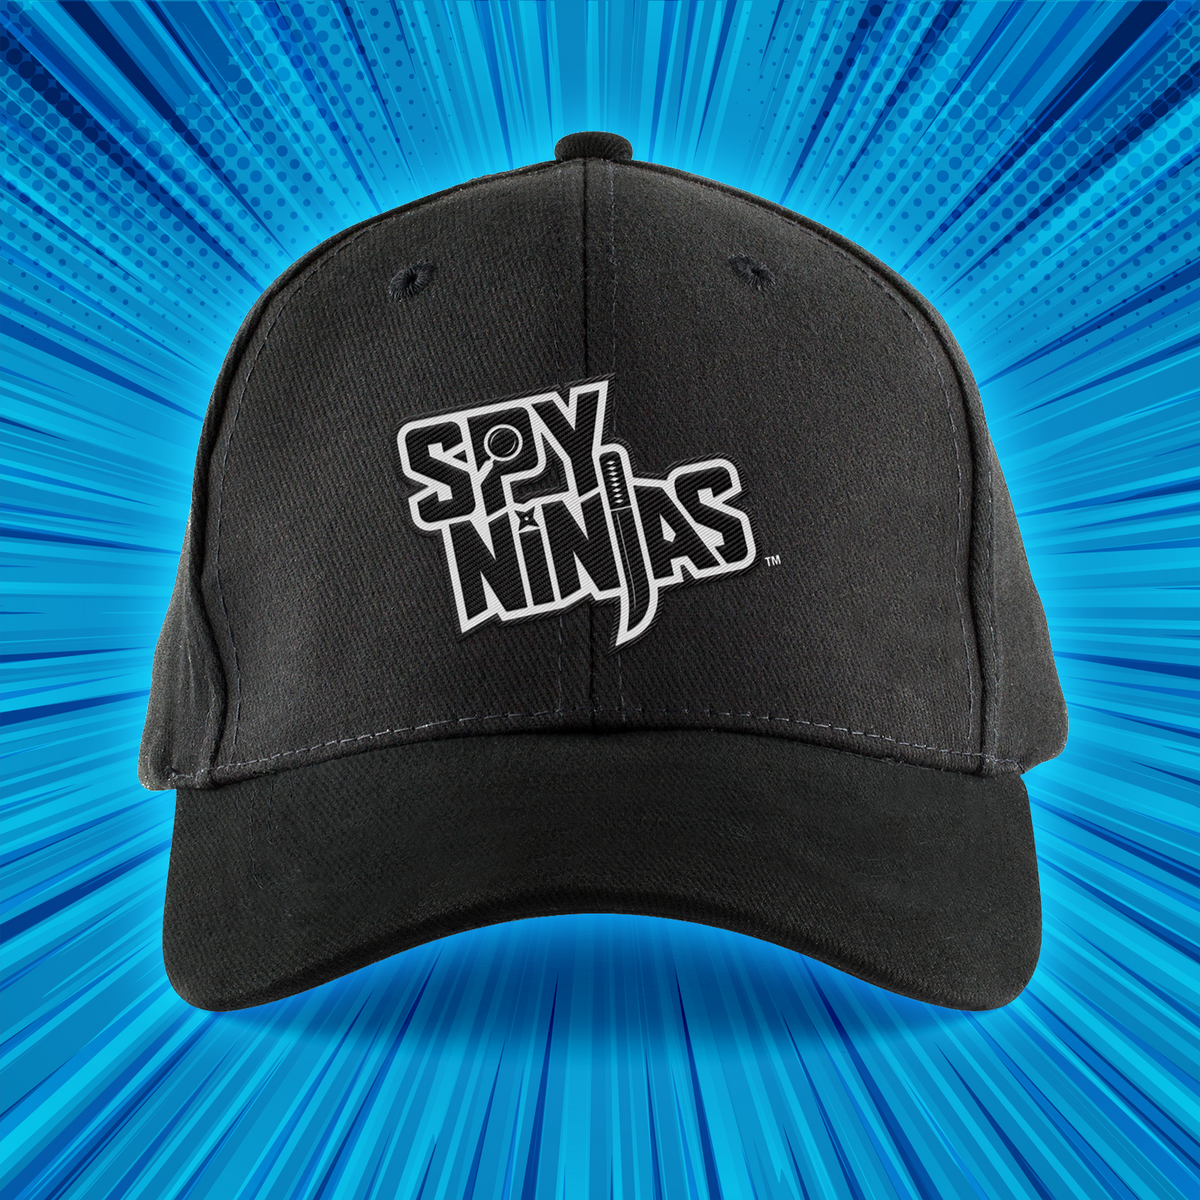 Spy Ninjas Cap - Black with White Trim